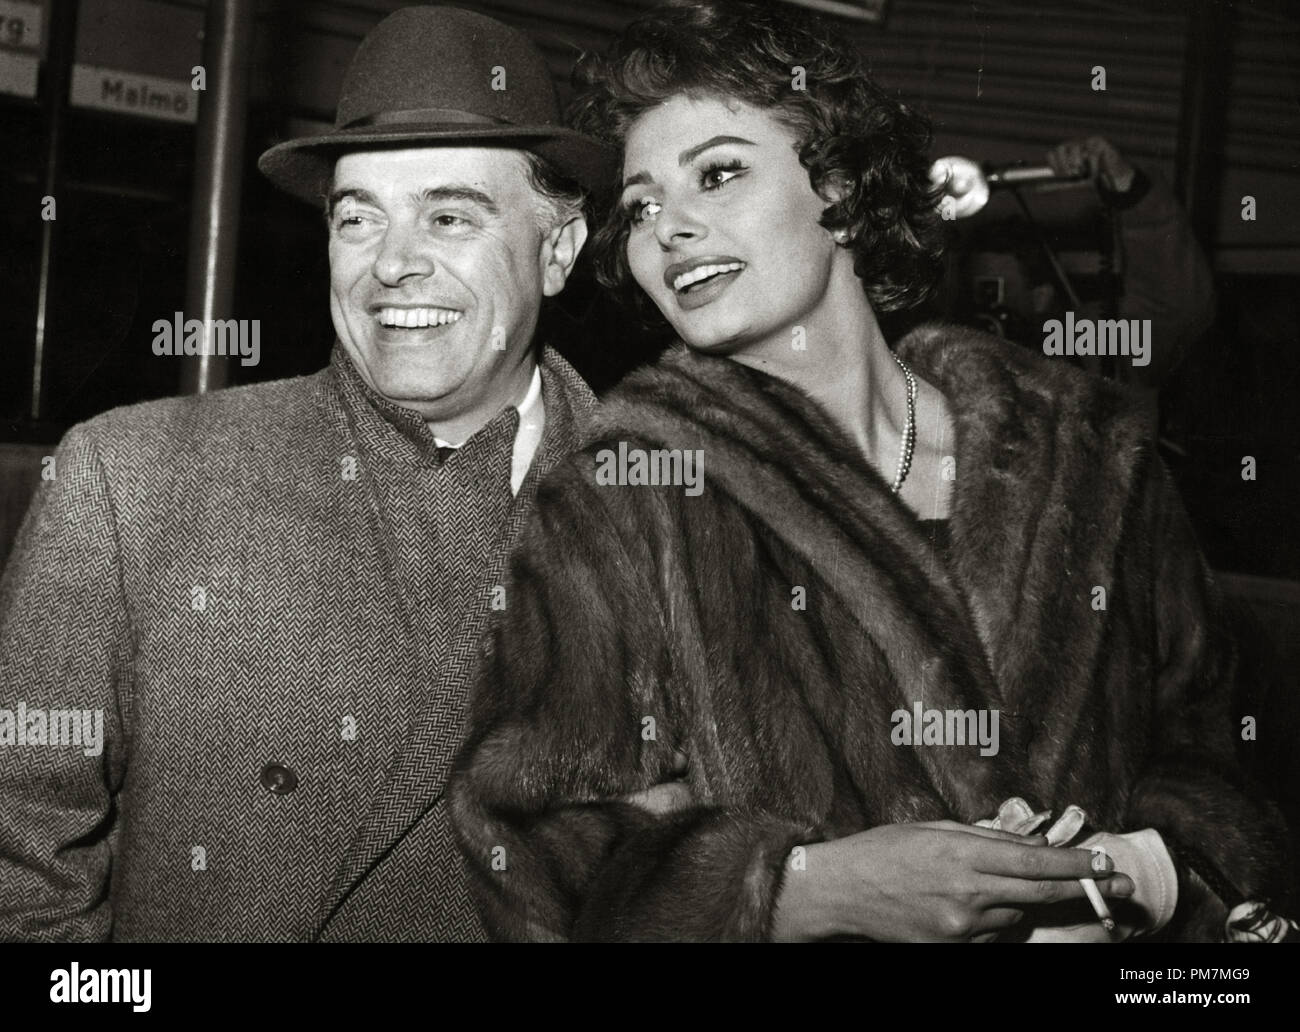 Carlo Ponti und Frau Sophia Loren, circa 1966. Datei Referenz # 31202 314 THA Stockfoto